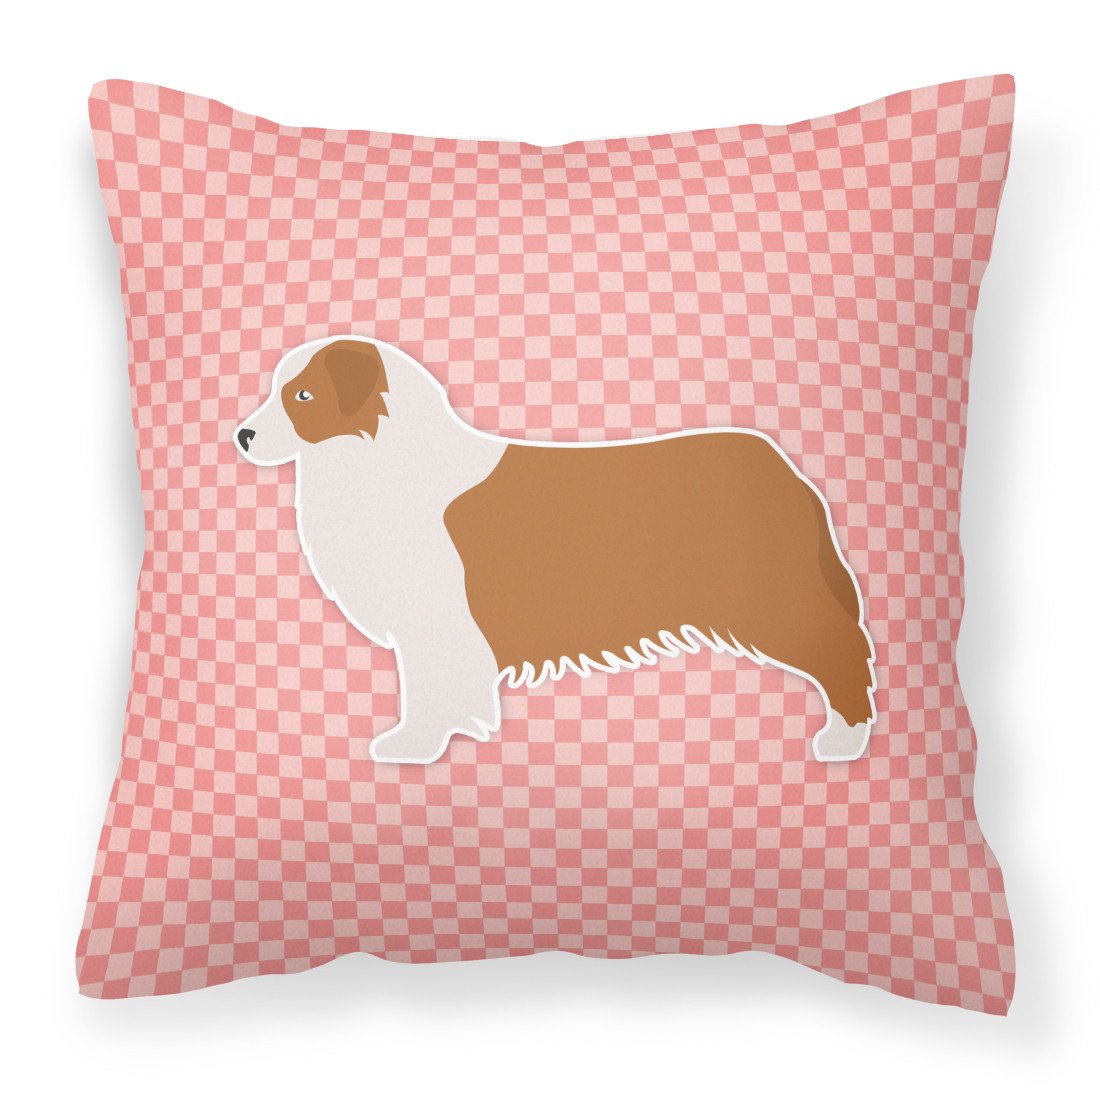 Australian Shepherd Dog Checkerboard Pink Fabric Decorative Pillow BB3633PW1818 by Caroline's Treasures